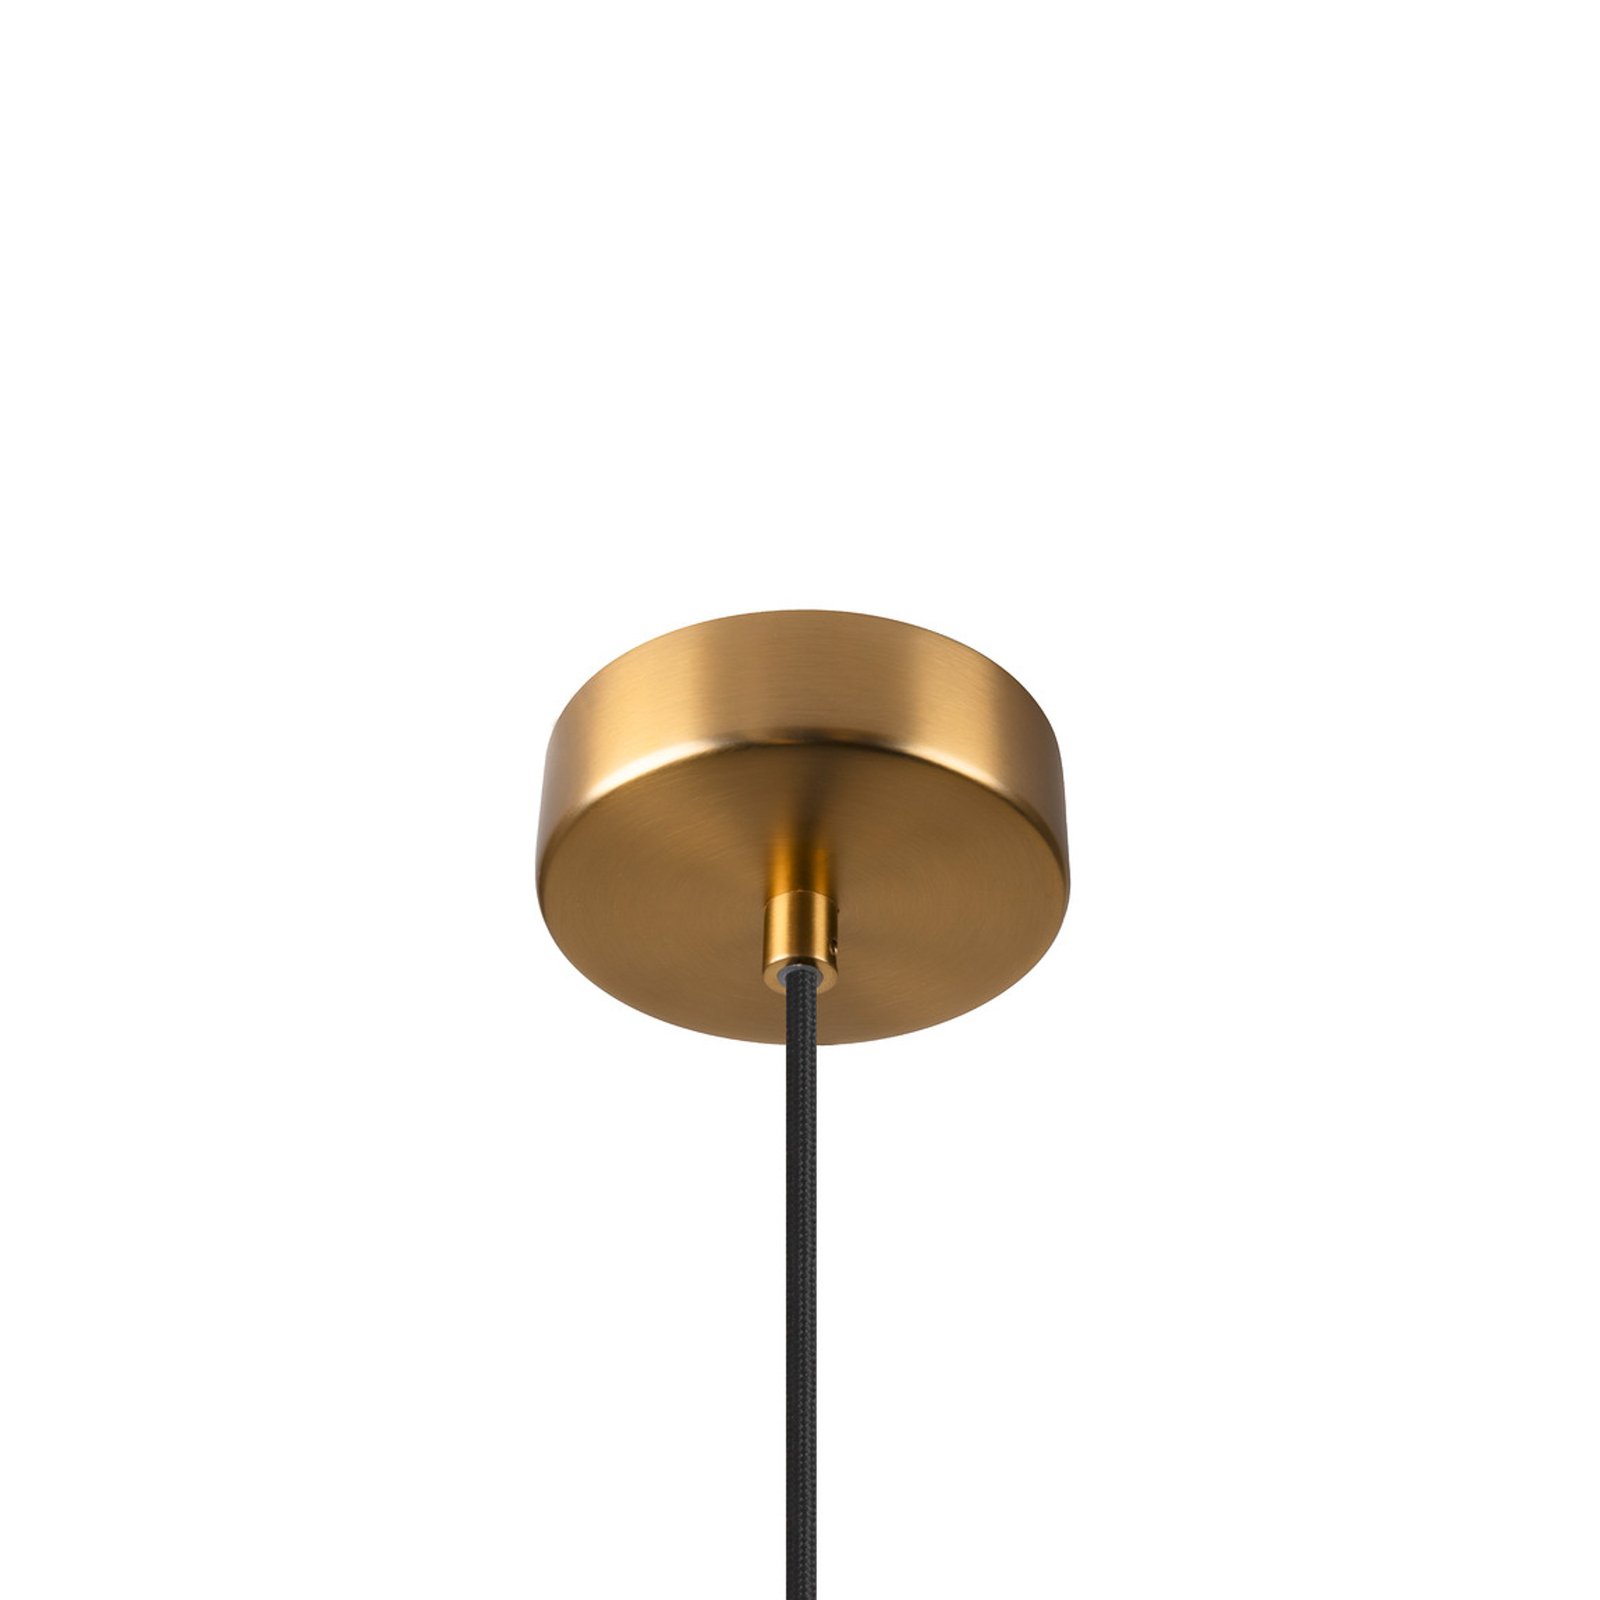 Lampa wisząca Pantilo Rope 27, kolor złoty, stal, Ø 27 cm